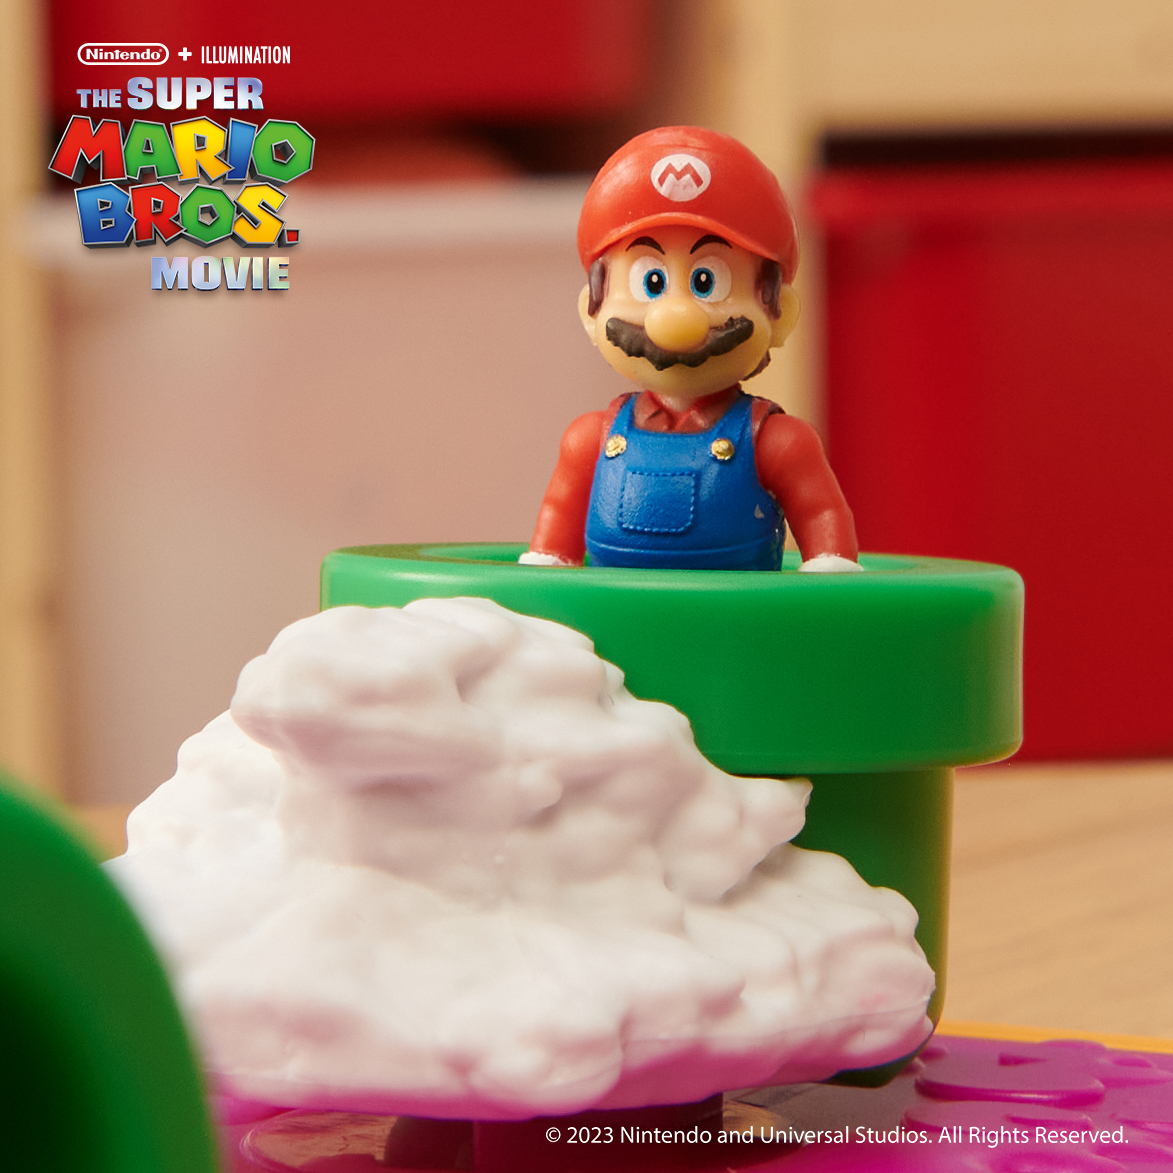 The Super Mario Bros. Movie Van Playset with 1.25” Mini Mario Figure